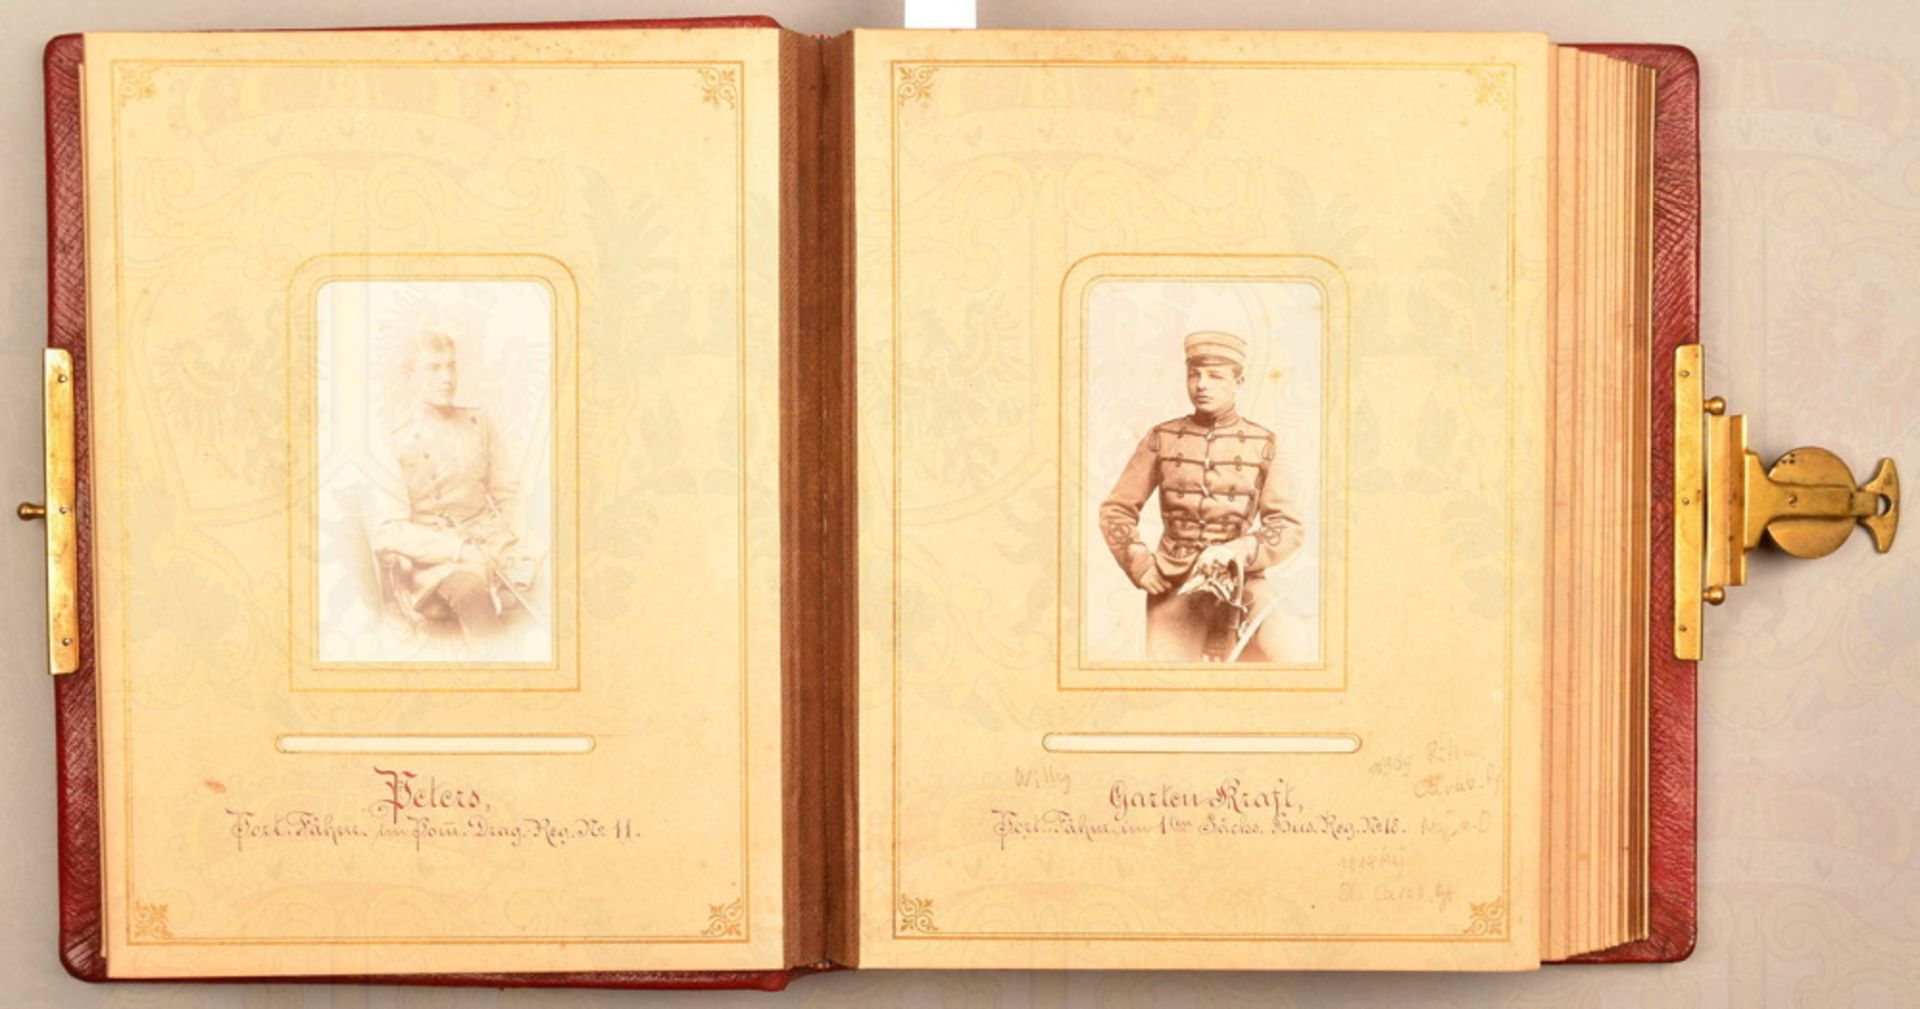 Photo album war academy Glogau 1887-1888 - Image 3 of 6